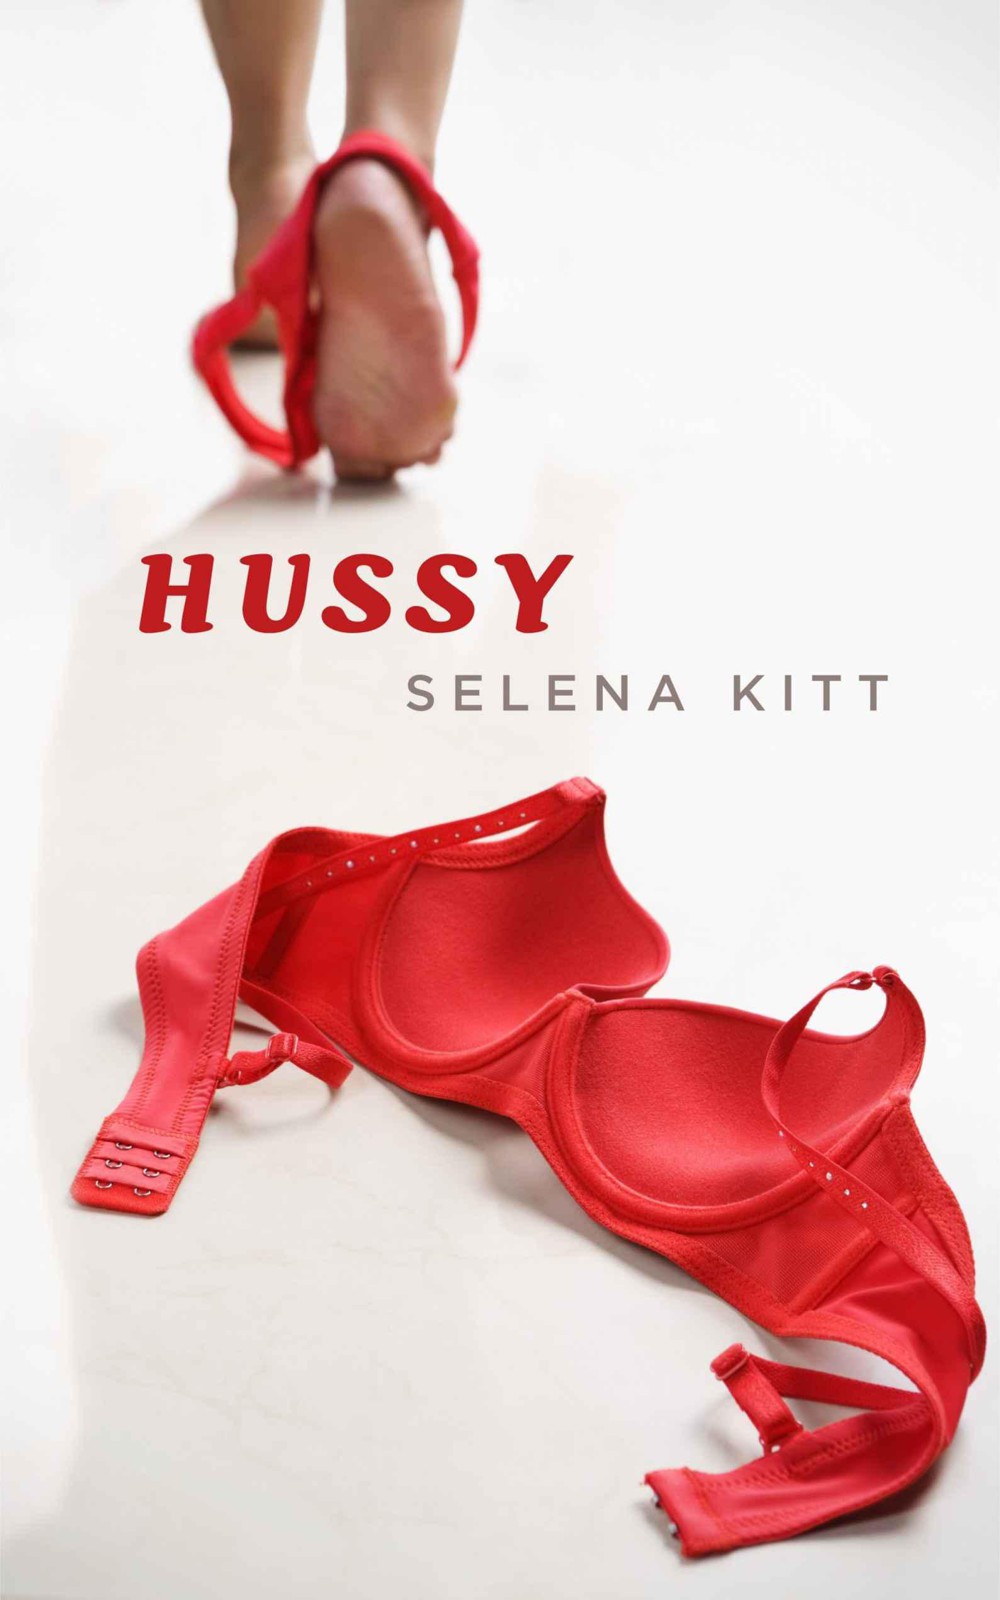 Kitt Selena - Hussy скачать бесплатно